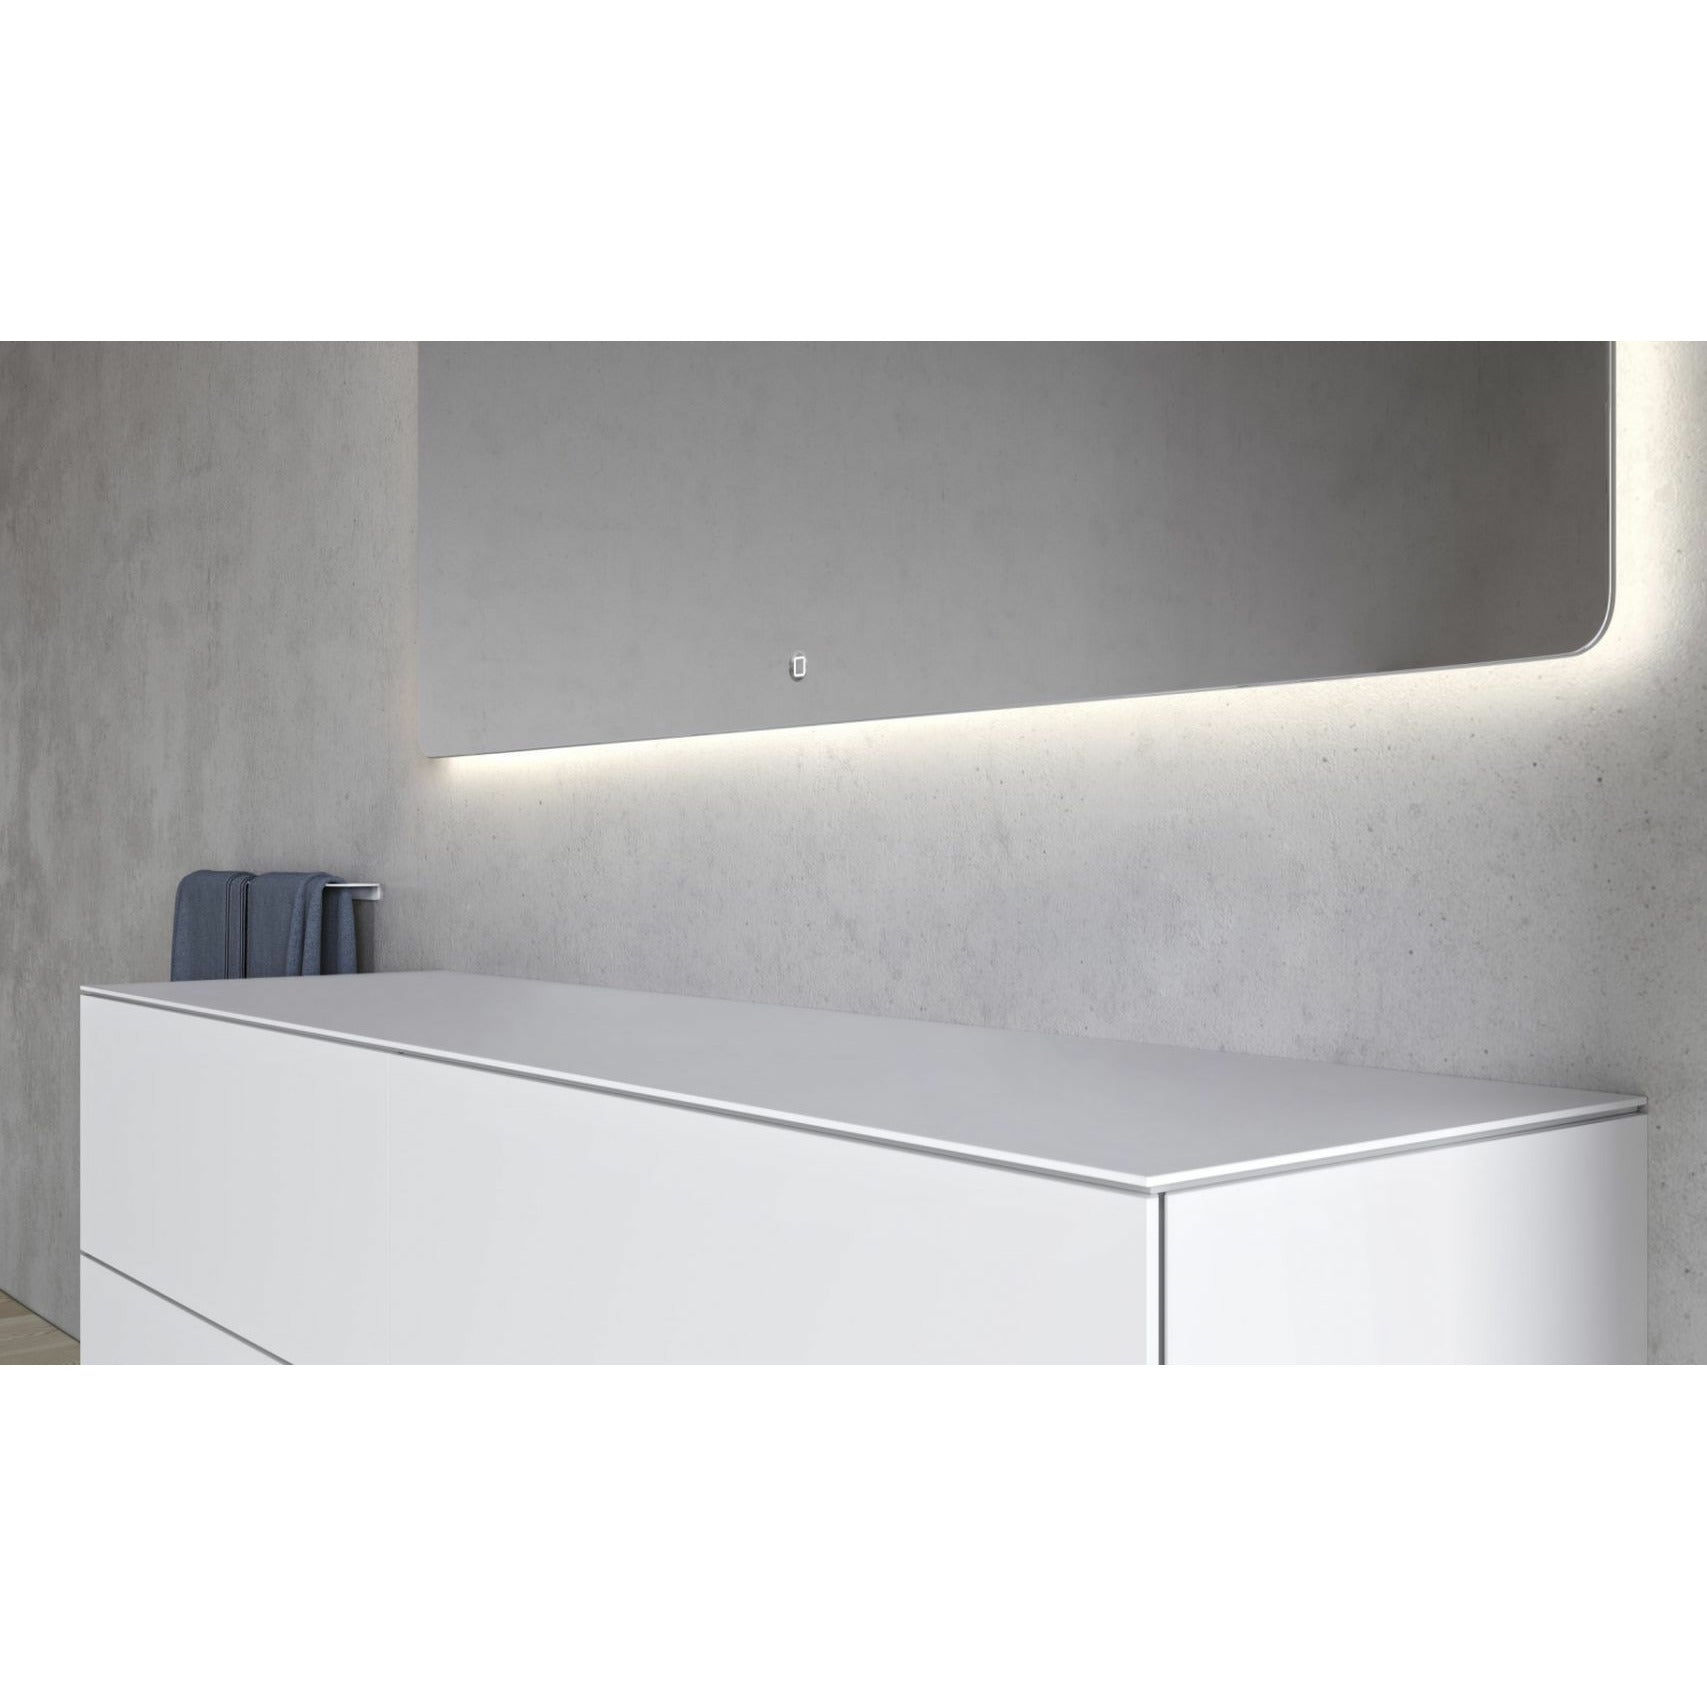 Copenhagen Bath Sq2 Double Cabinet With Countertop, L160 Cm